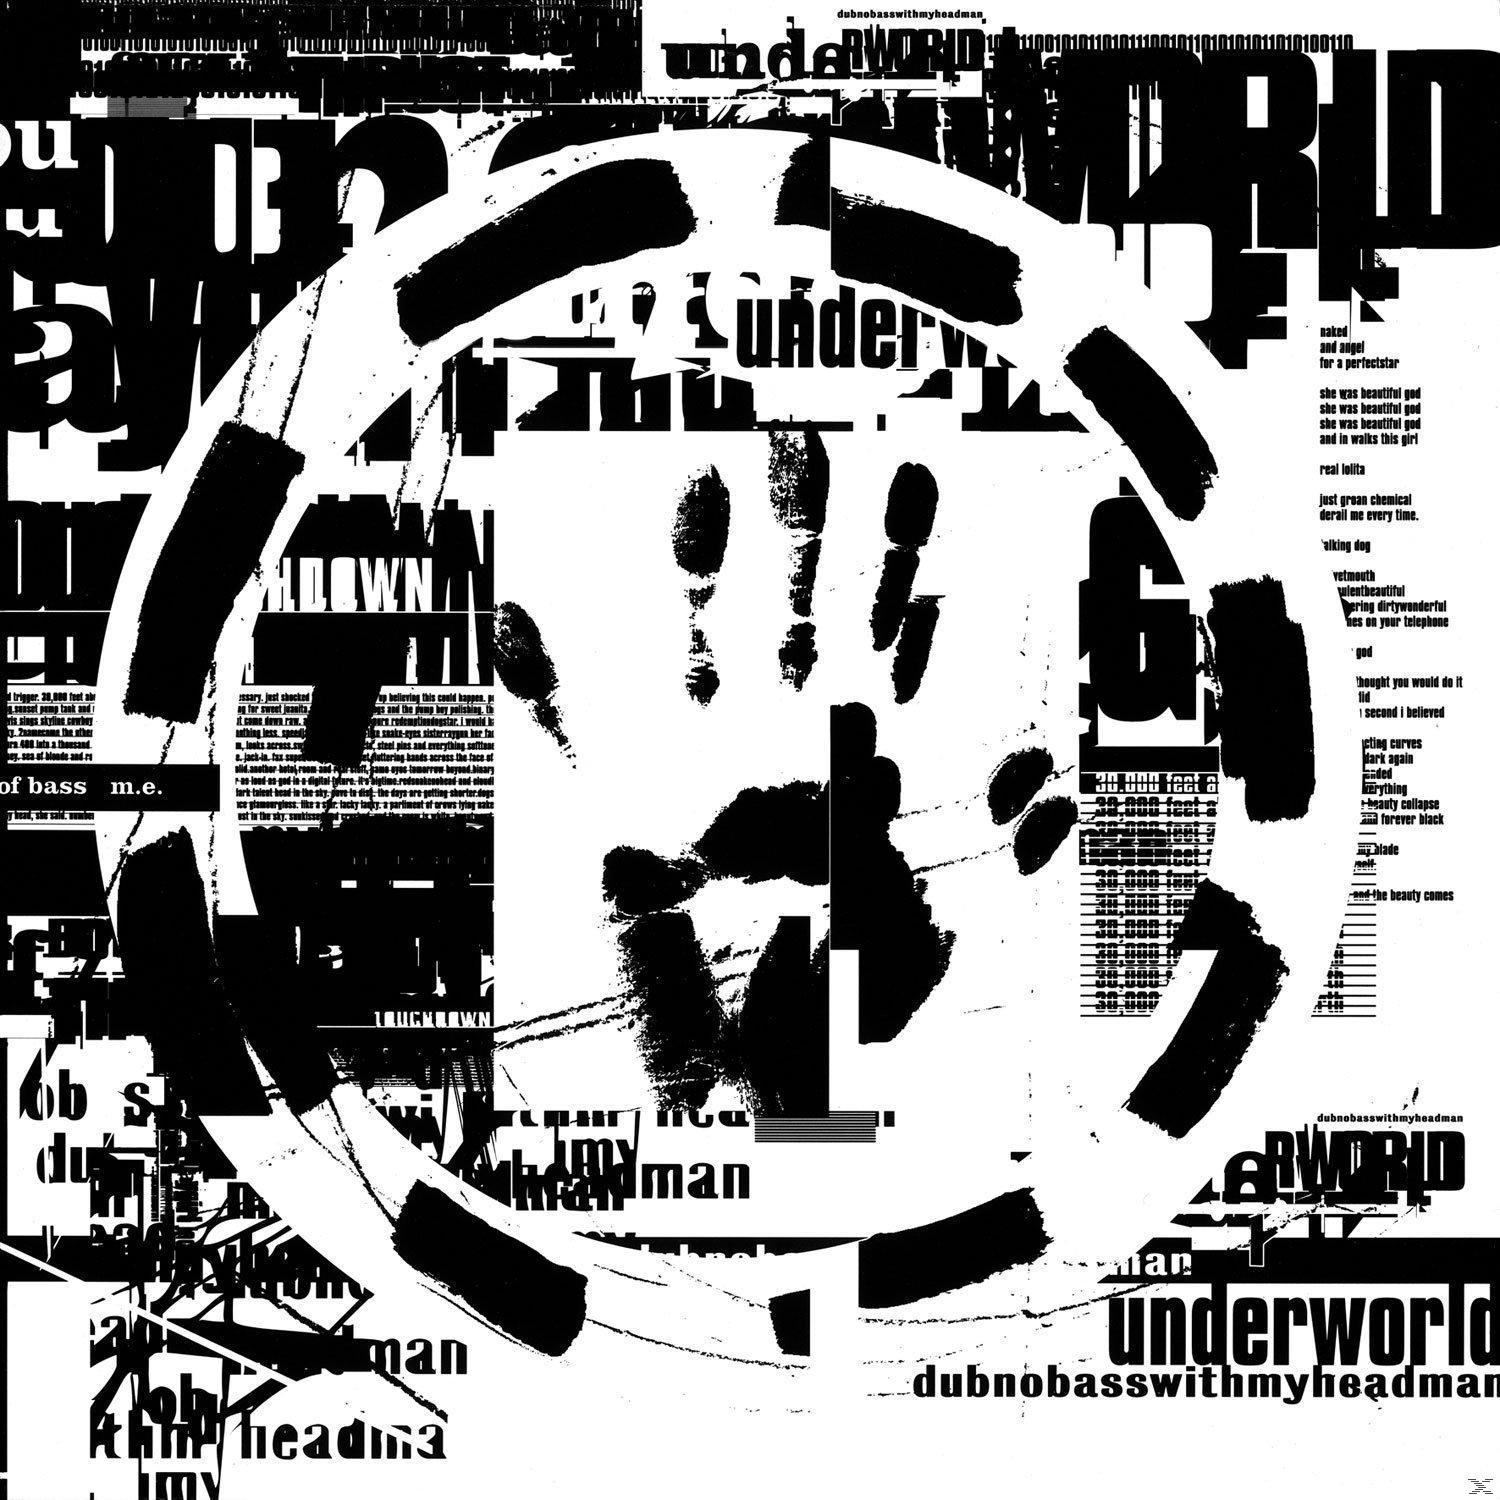 Underworld LP (Vinyl) - - Dubnobasswithmyheadman Ltd.Edt., Remastered) (2